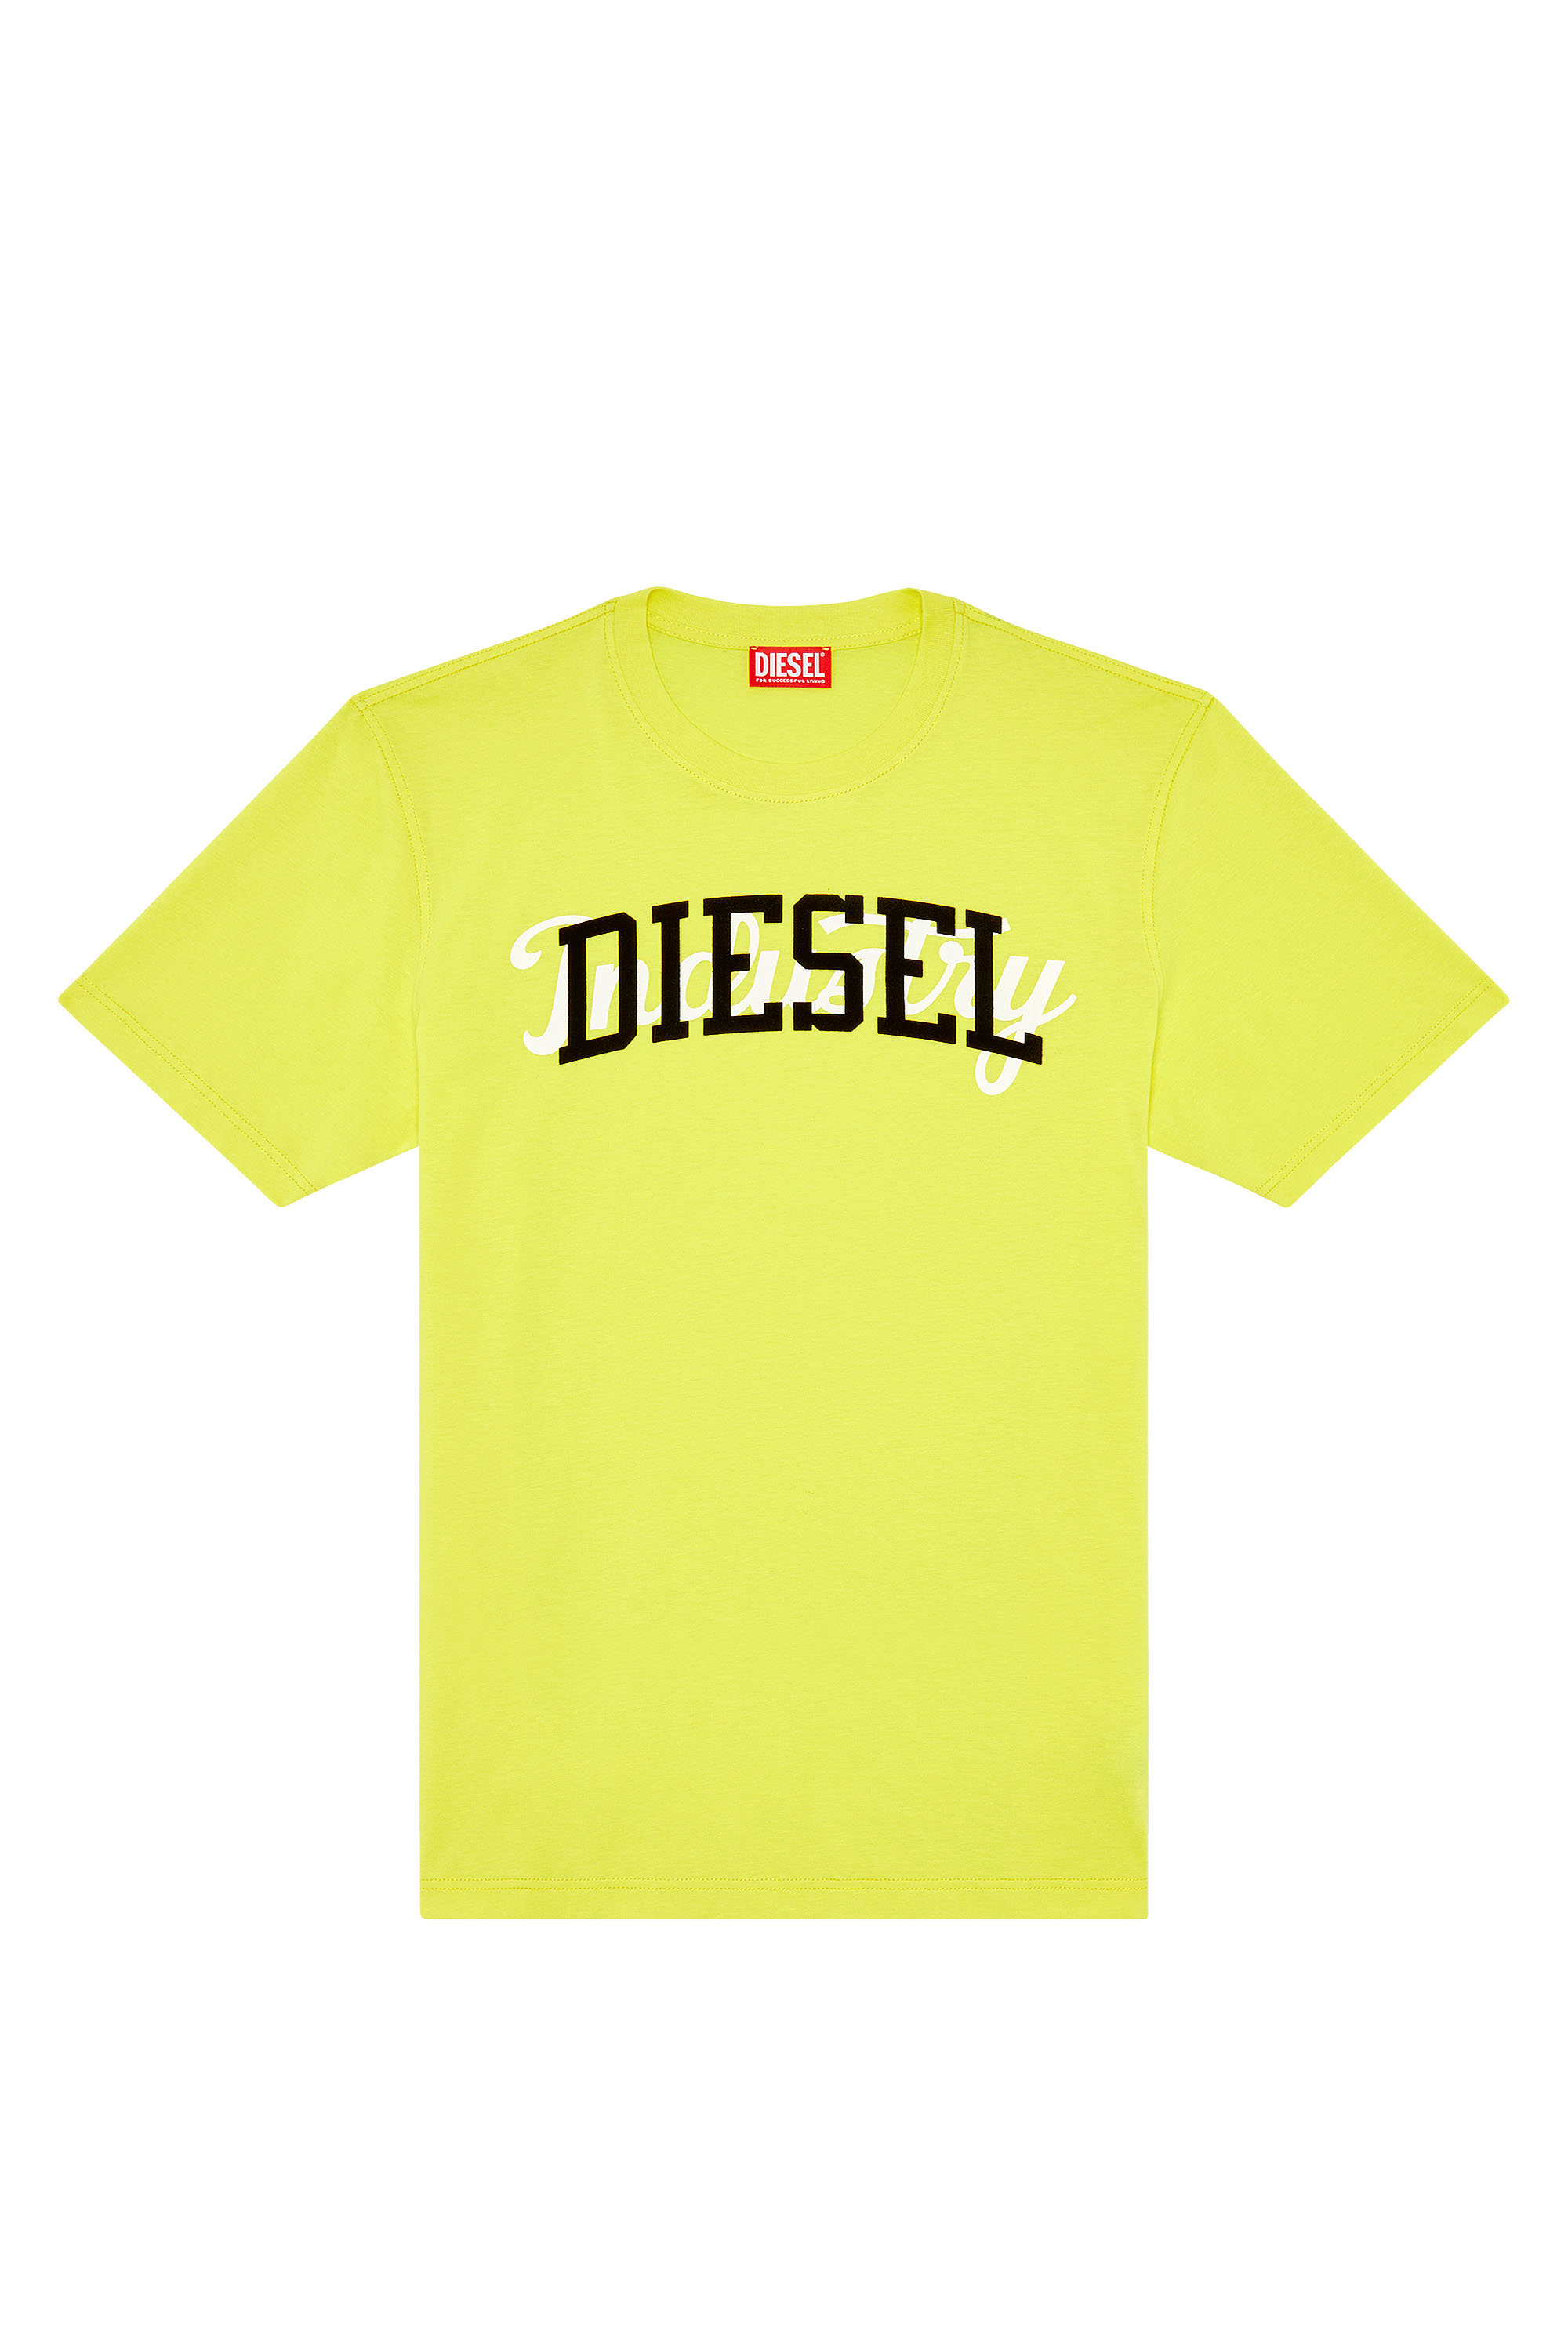 Diesel - T-JUST-N10, Man T-shirt with contrasting Diesel prints in Yellow - Image 3